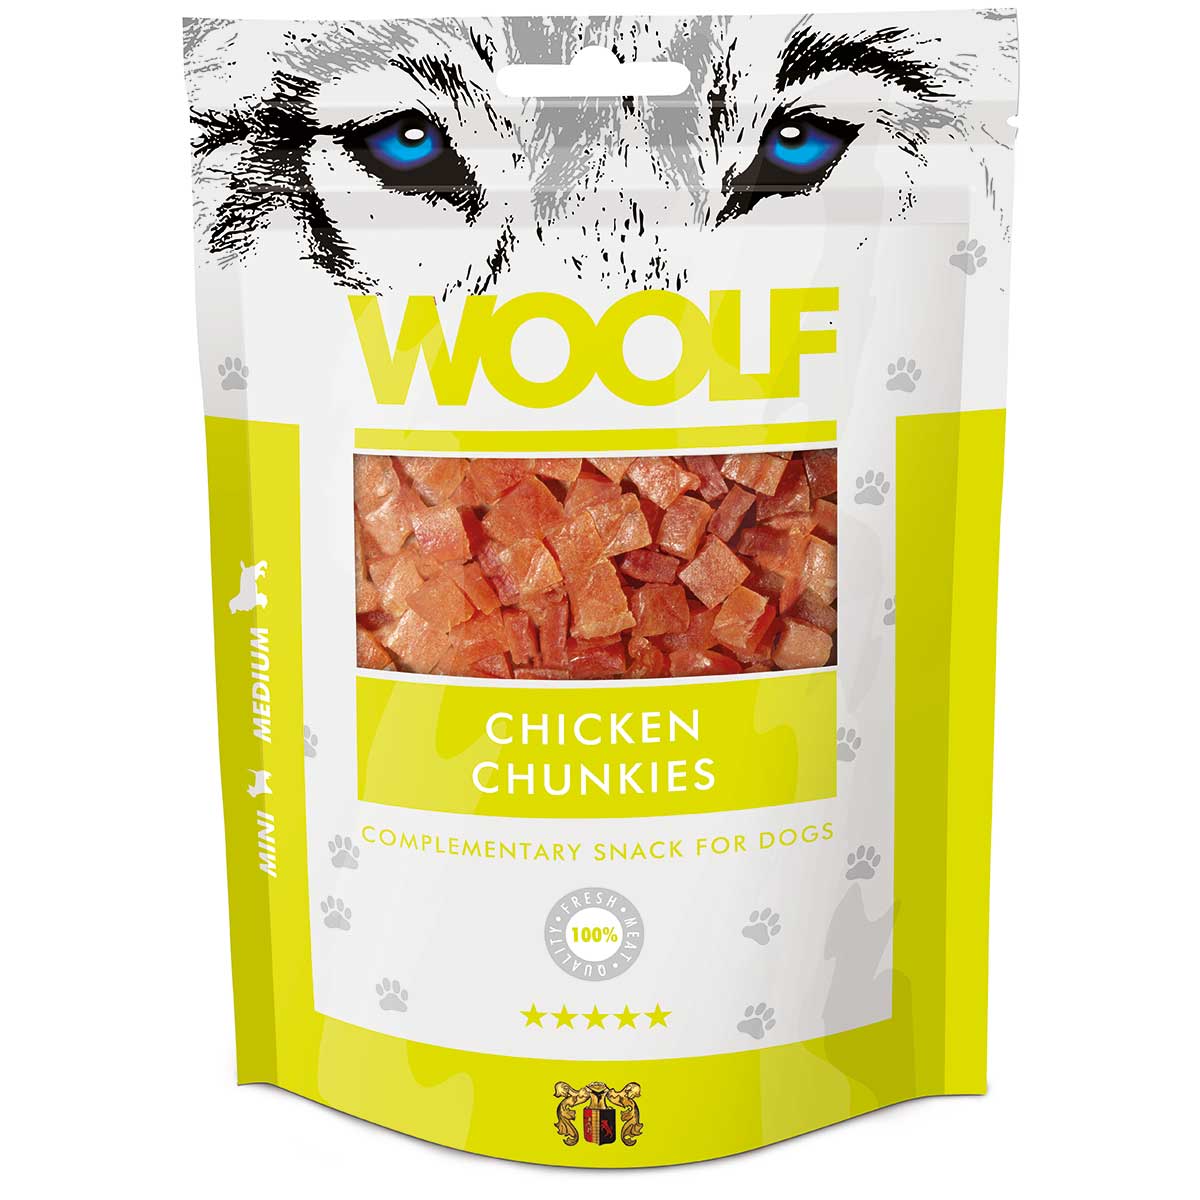 Woolf Dog treat chicken chunkies